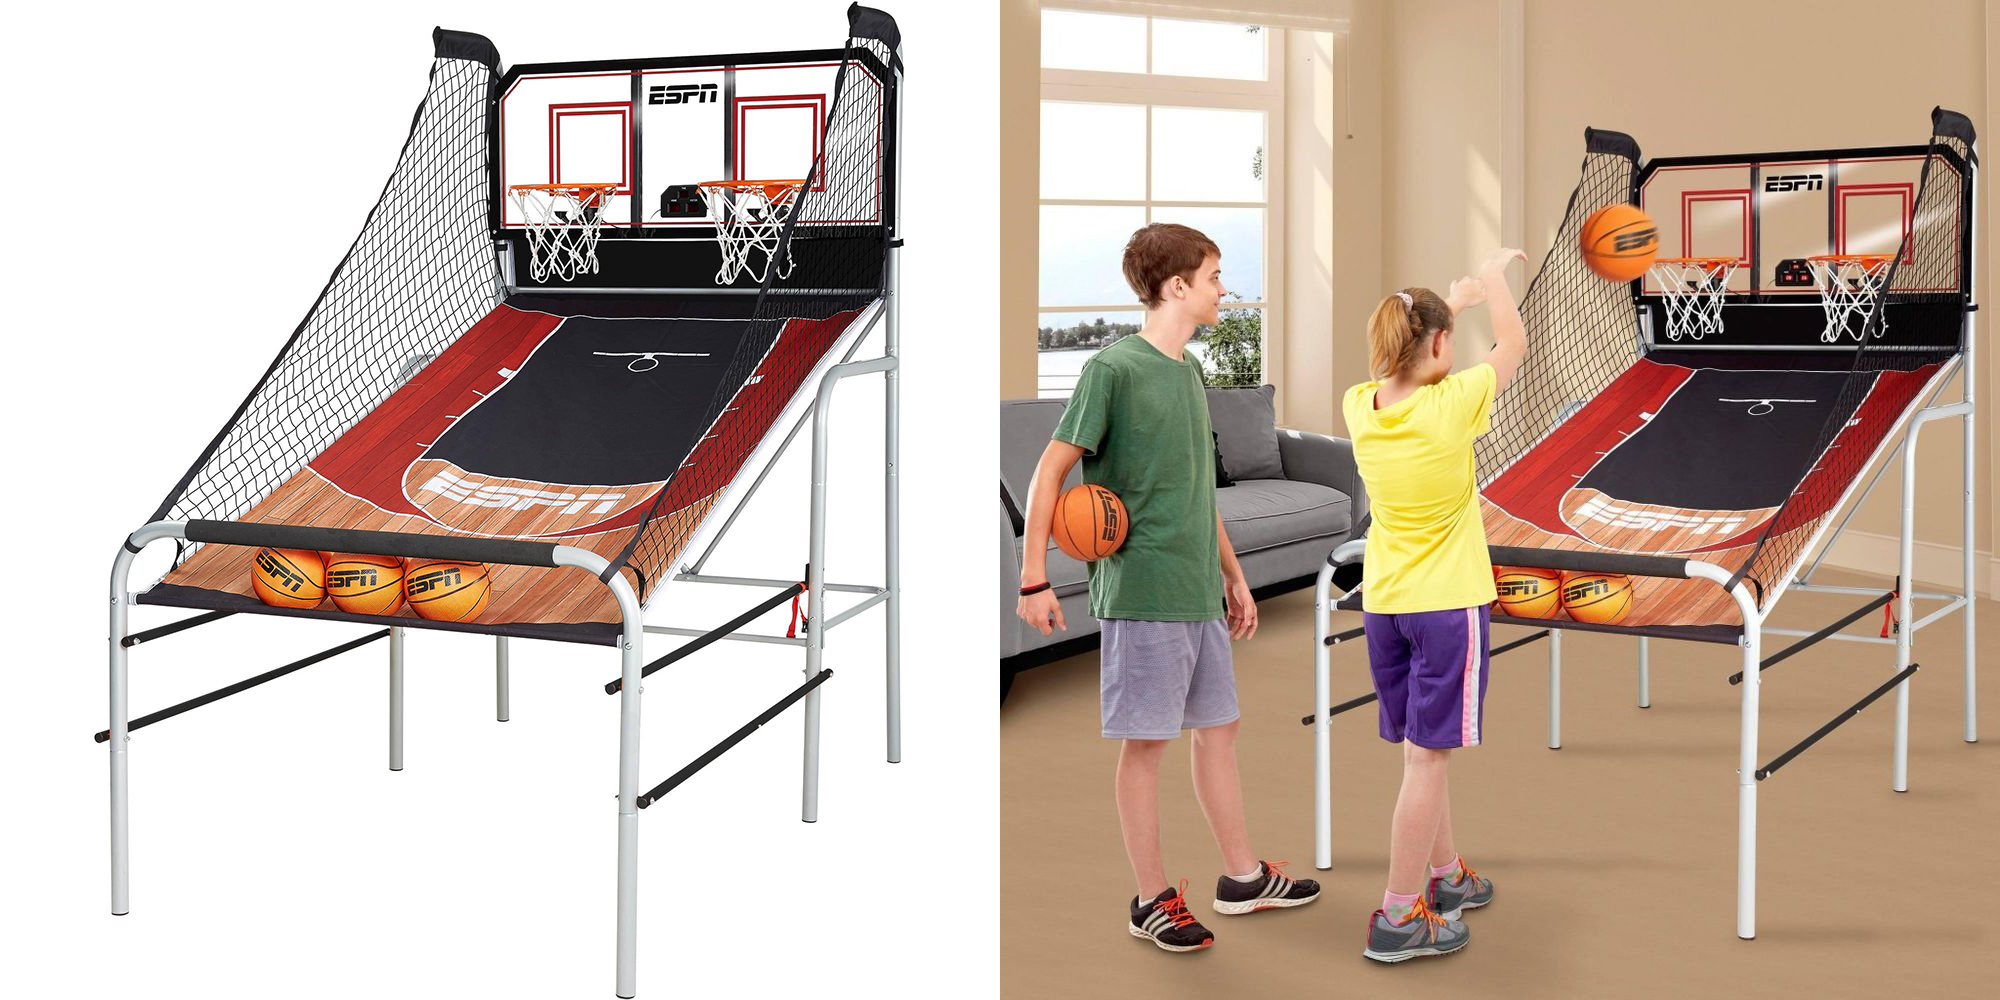 E-Jet Sport Game Basketball Arcade Games (Online Battle Challenge, Shoot Hoops) Electronic Arcade Basketball Games, Dual Shot craft-ivf